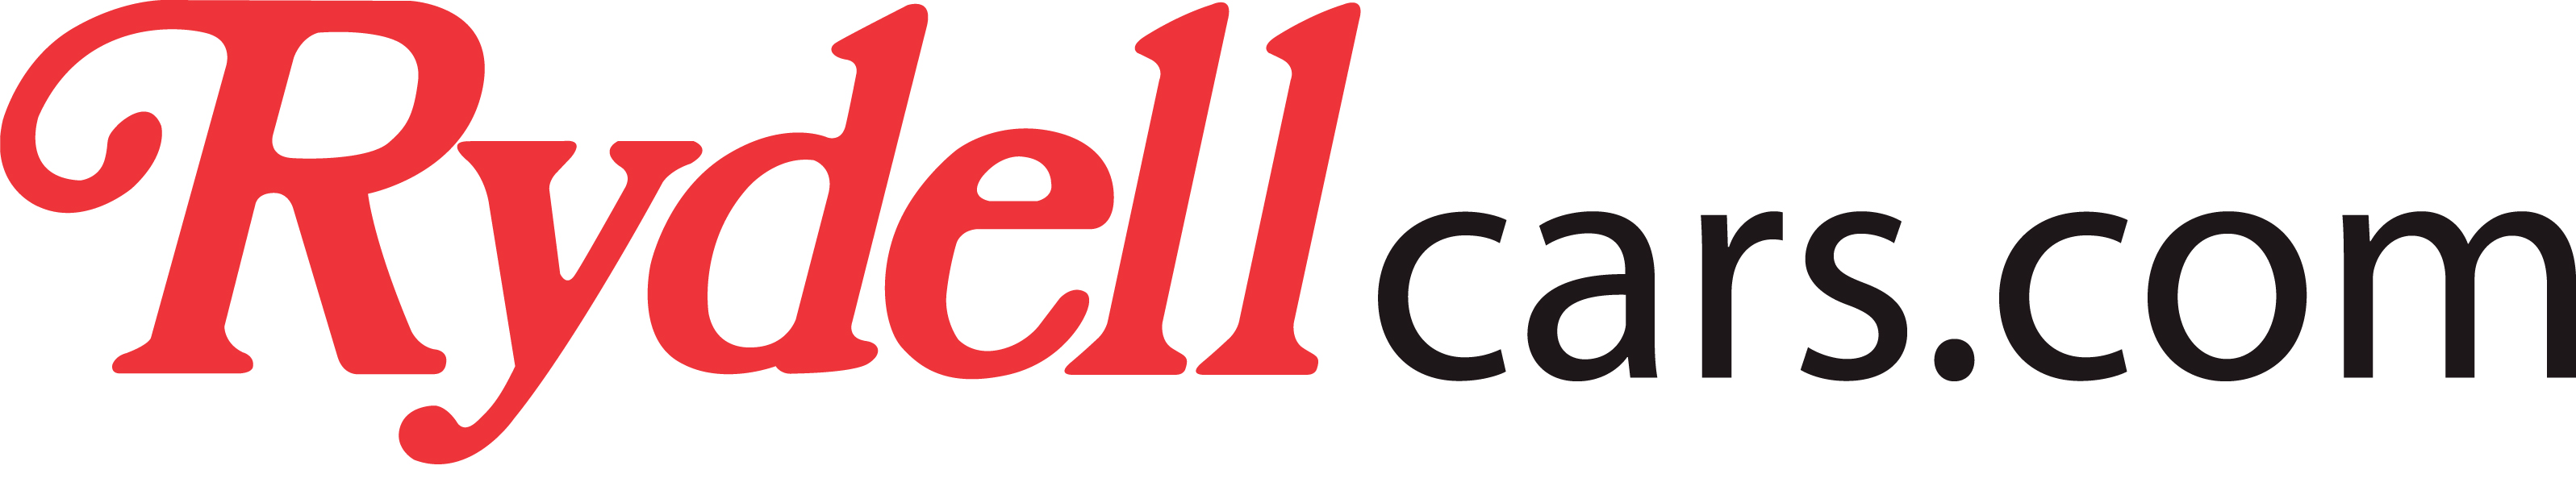 Rydell Cars logo